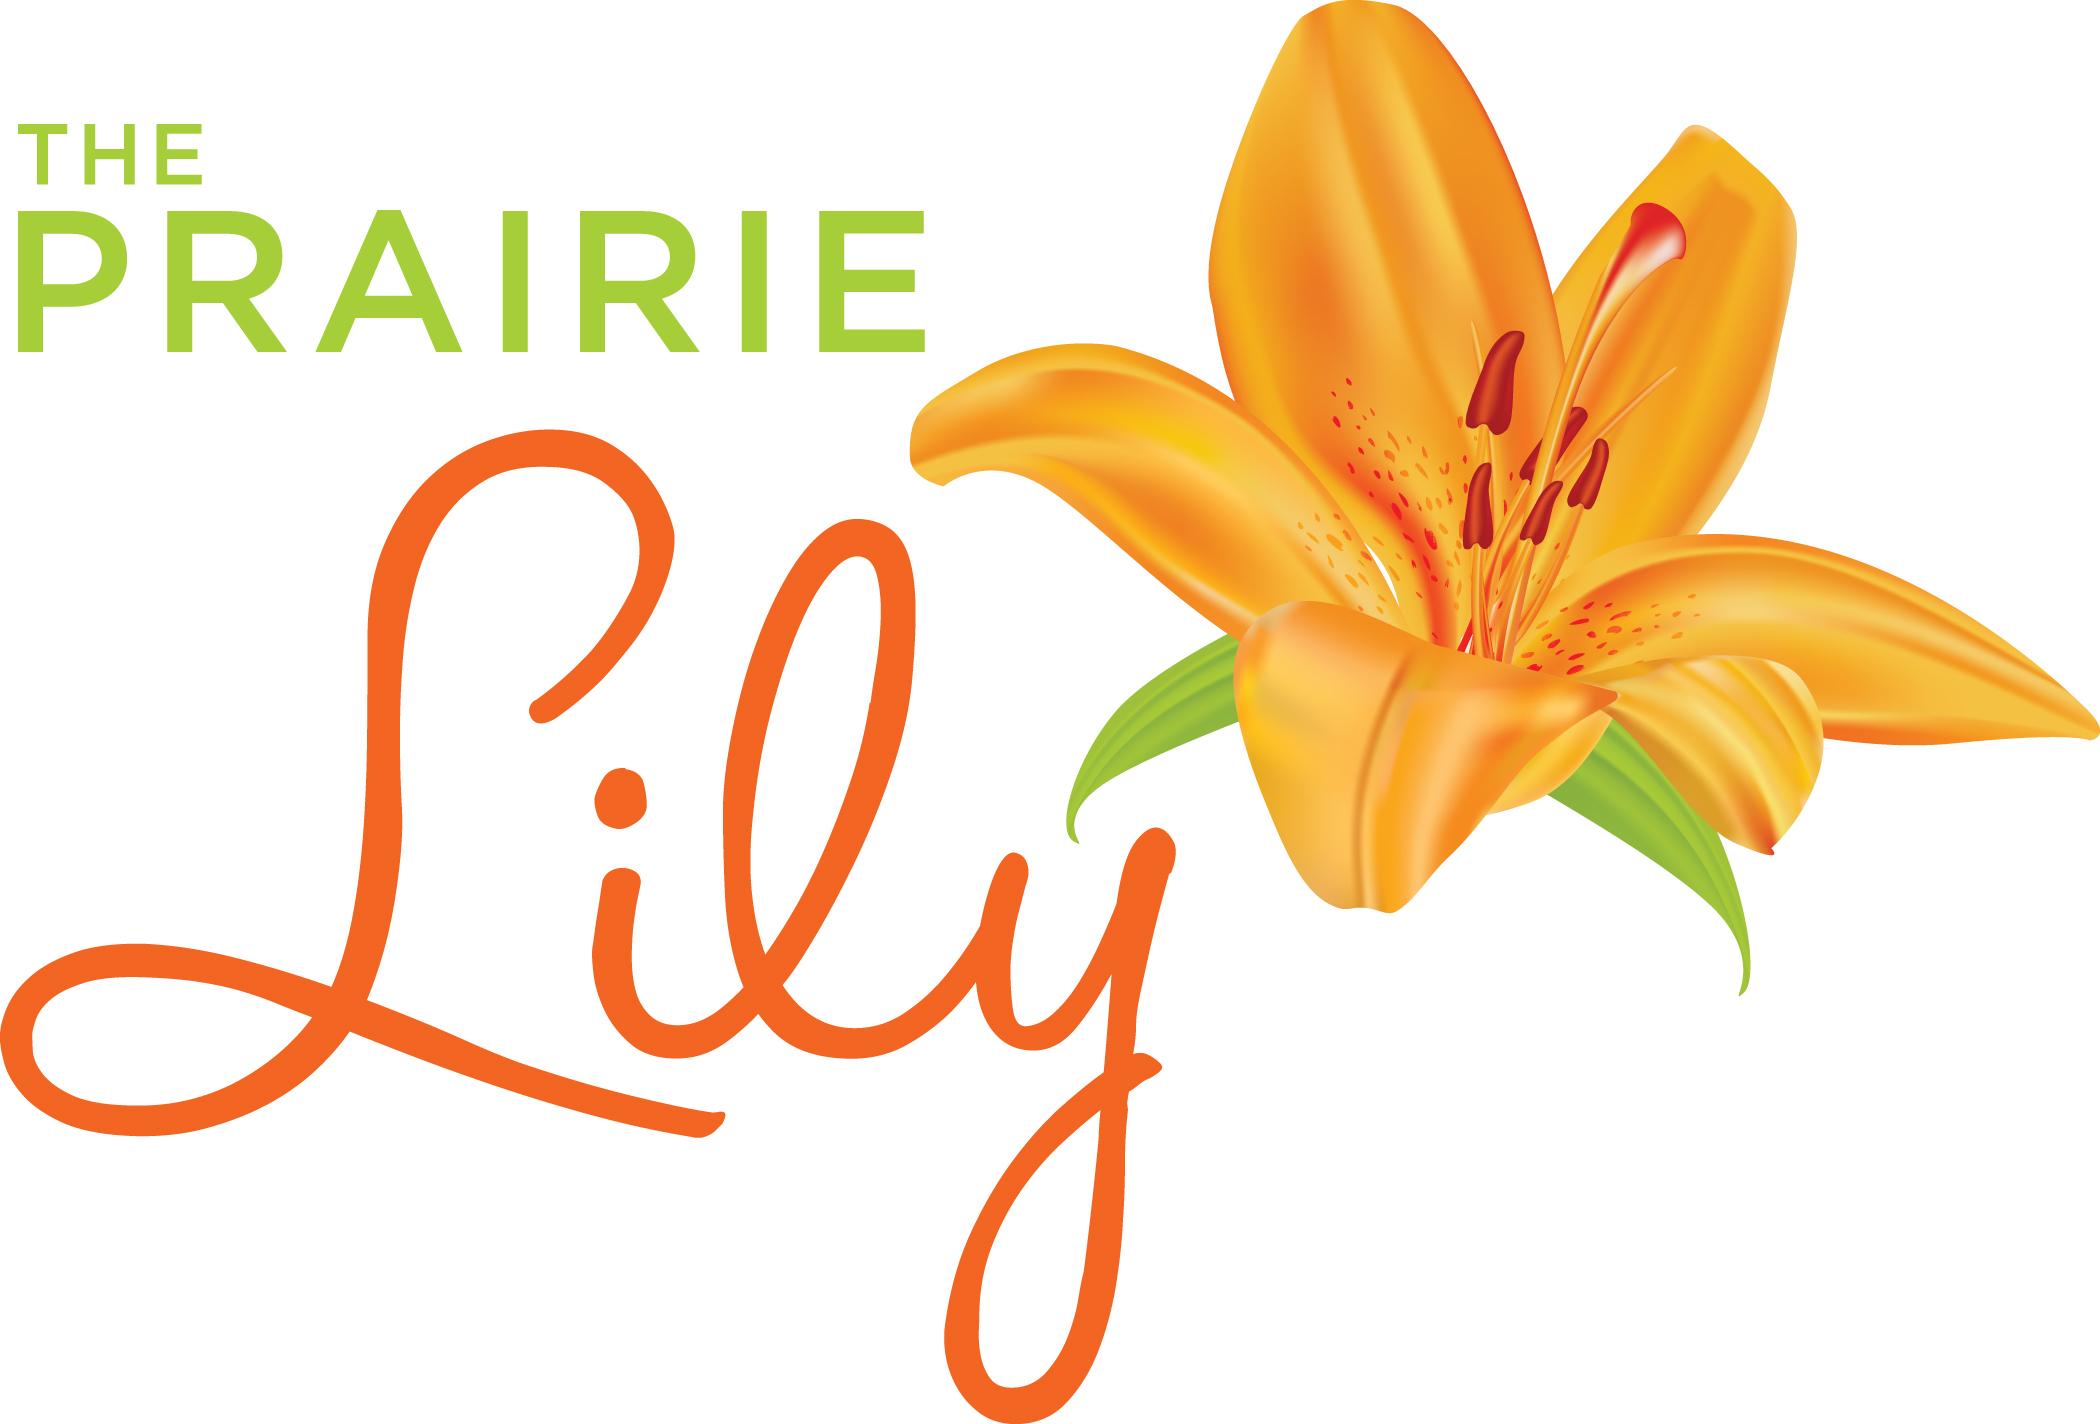 The Prairie Lily